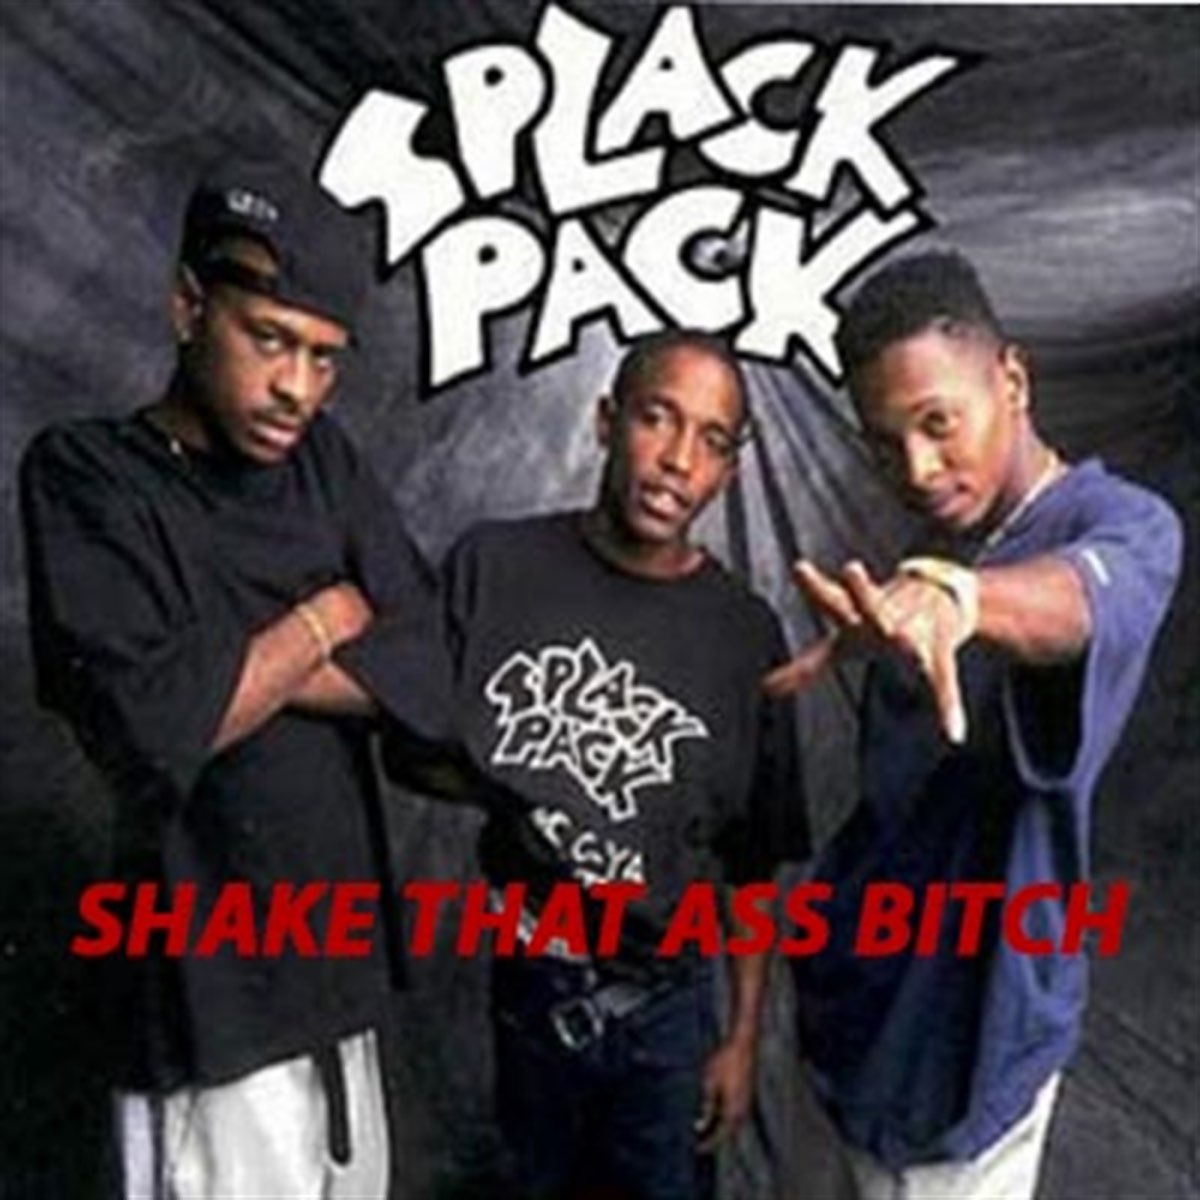 Shake That Ass Bitch – Album par Splack Pack – Apple Music